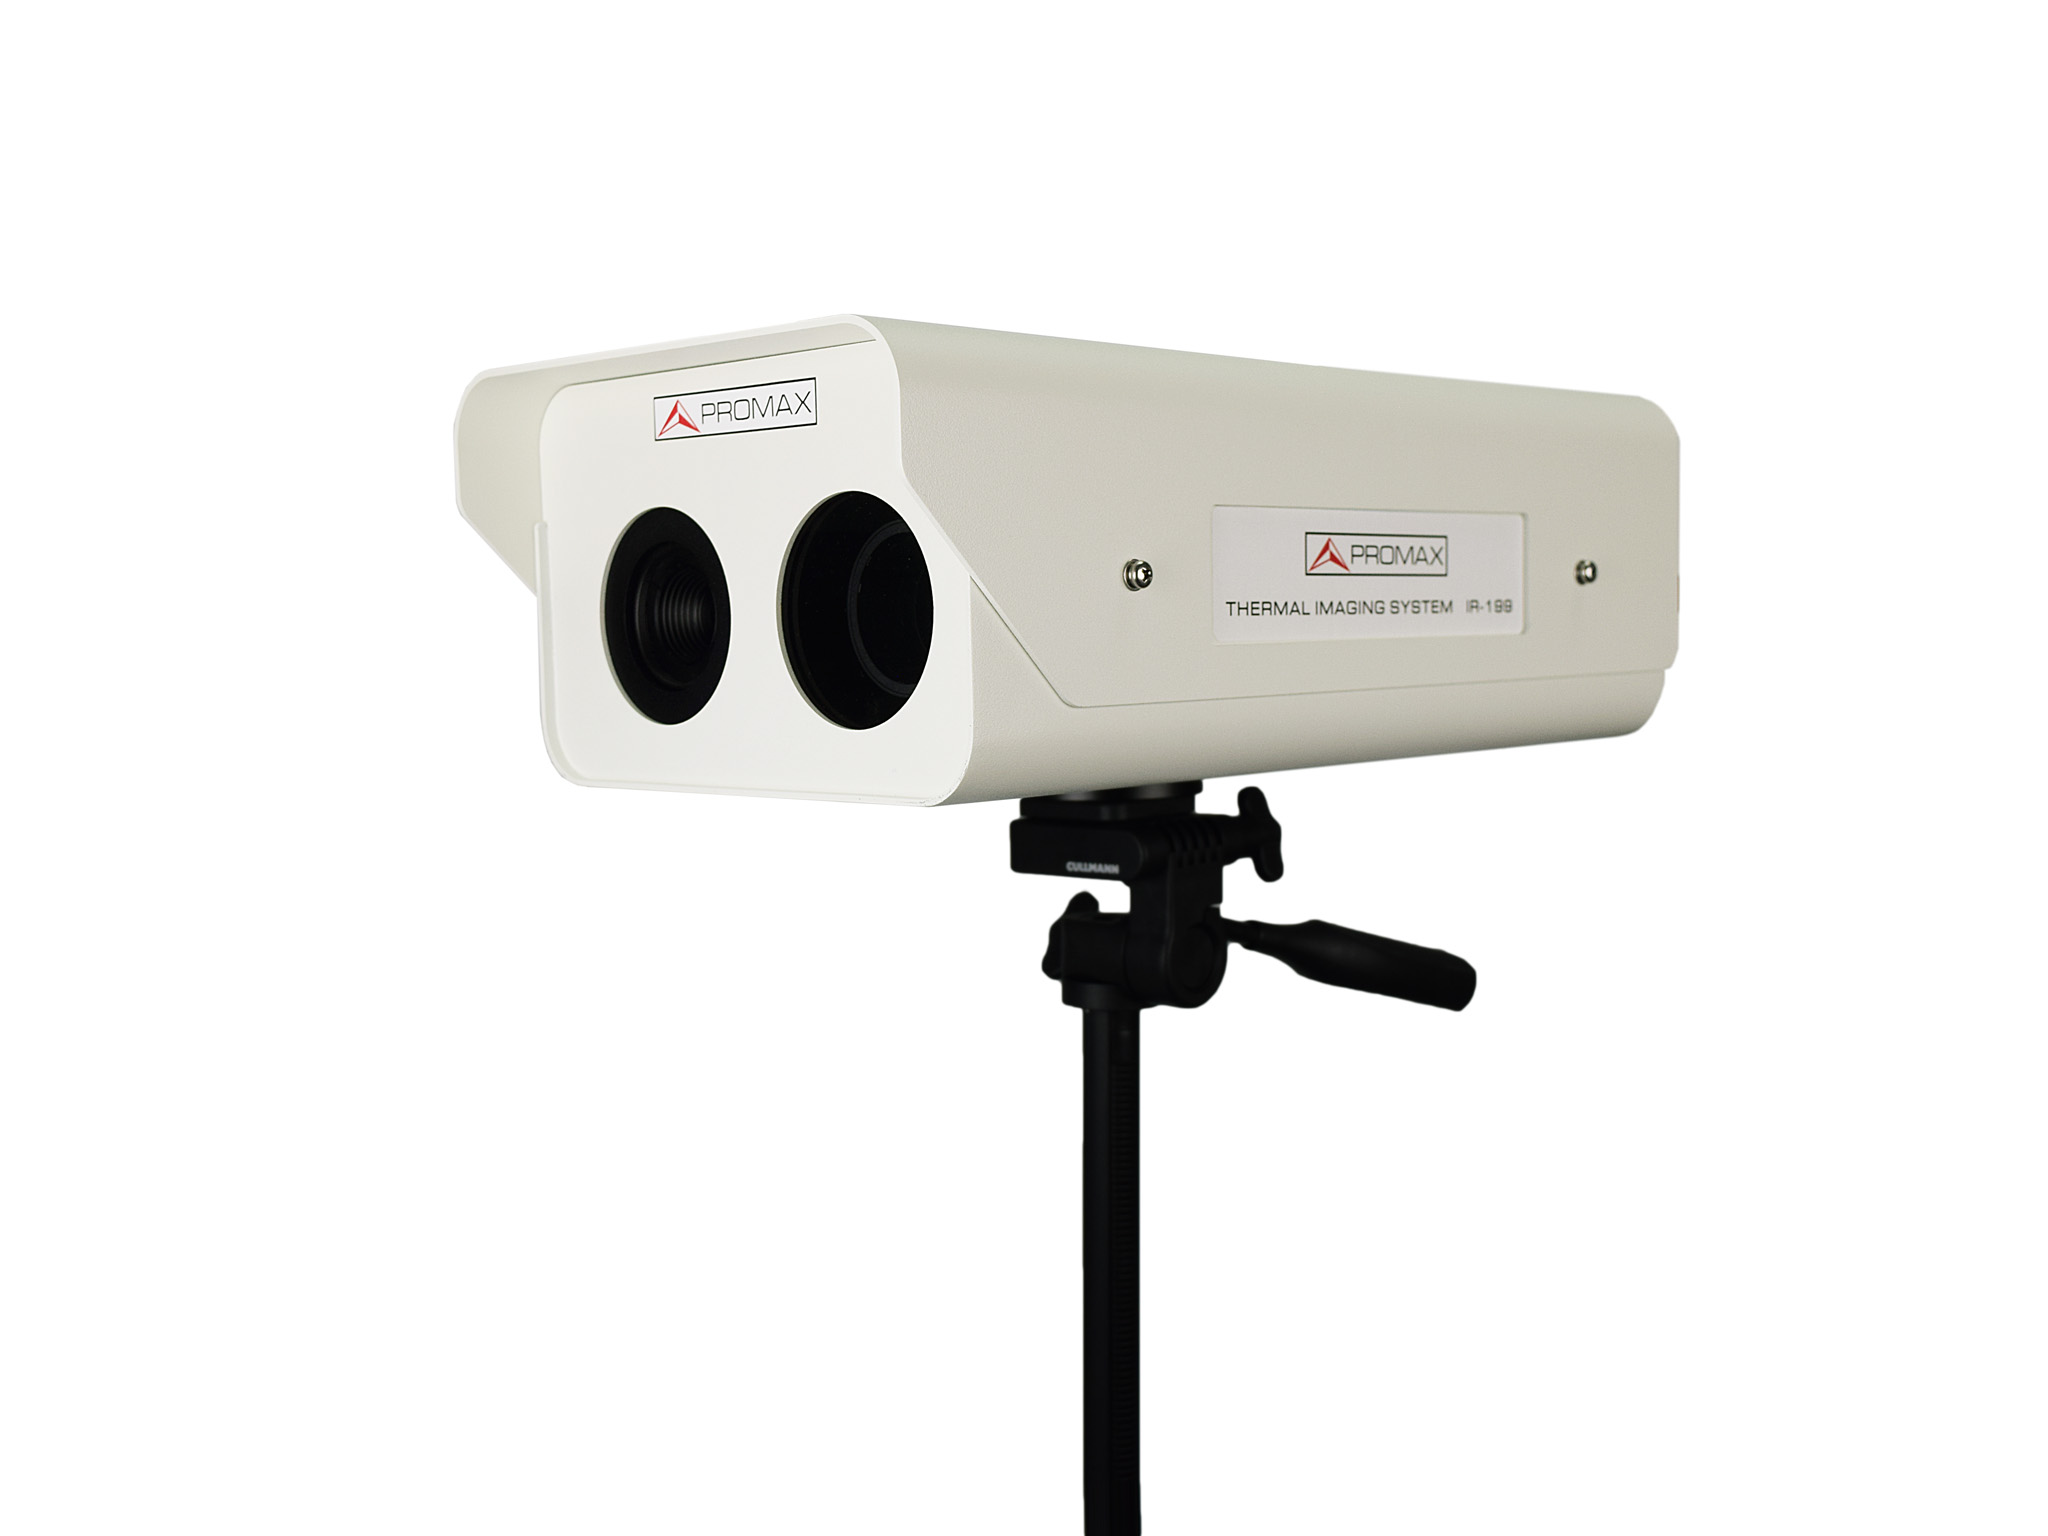 IR-198 / IR-199: Fixed thermal imaging camera for HBT